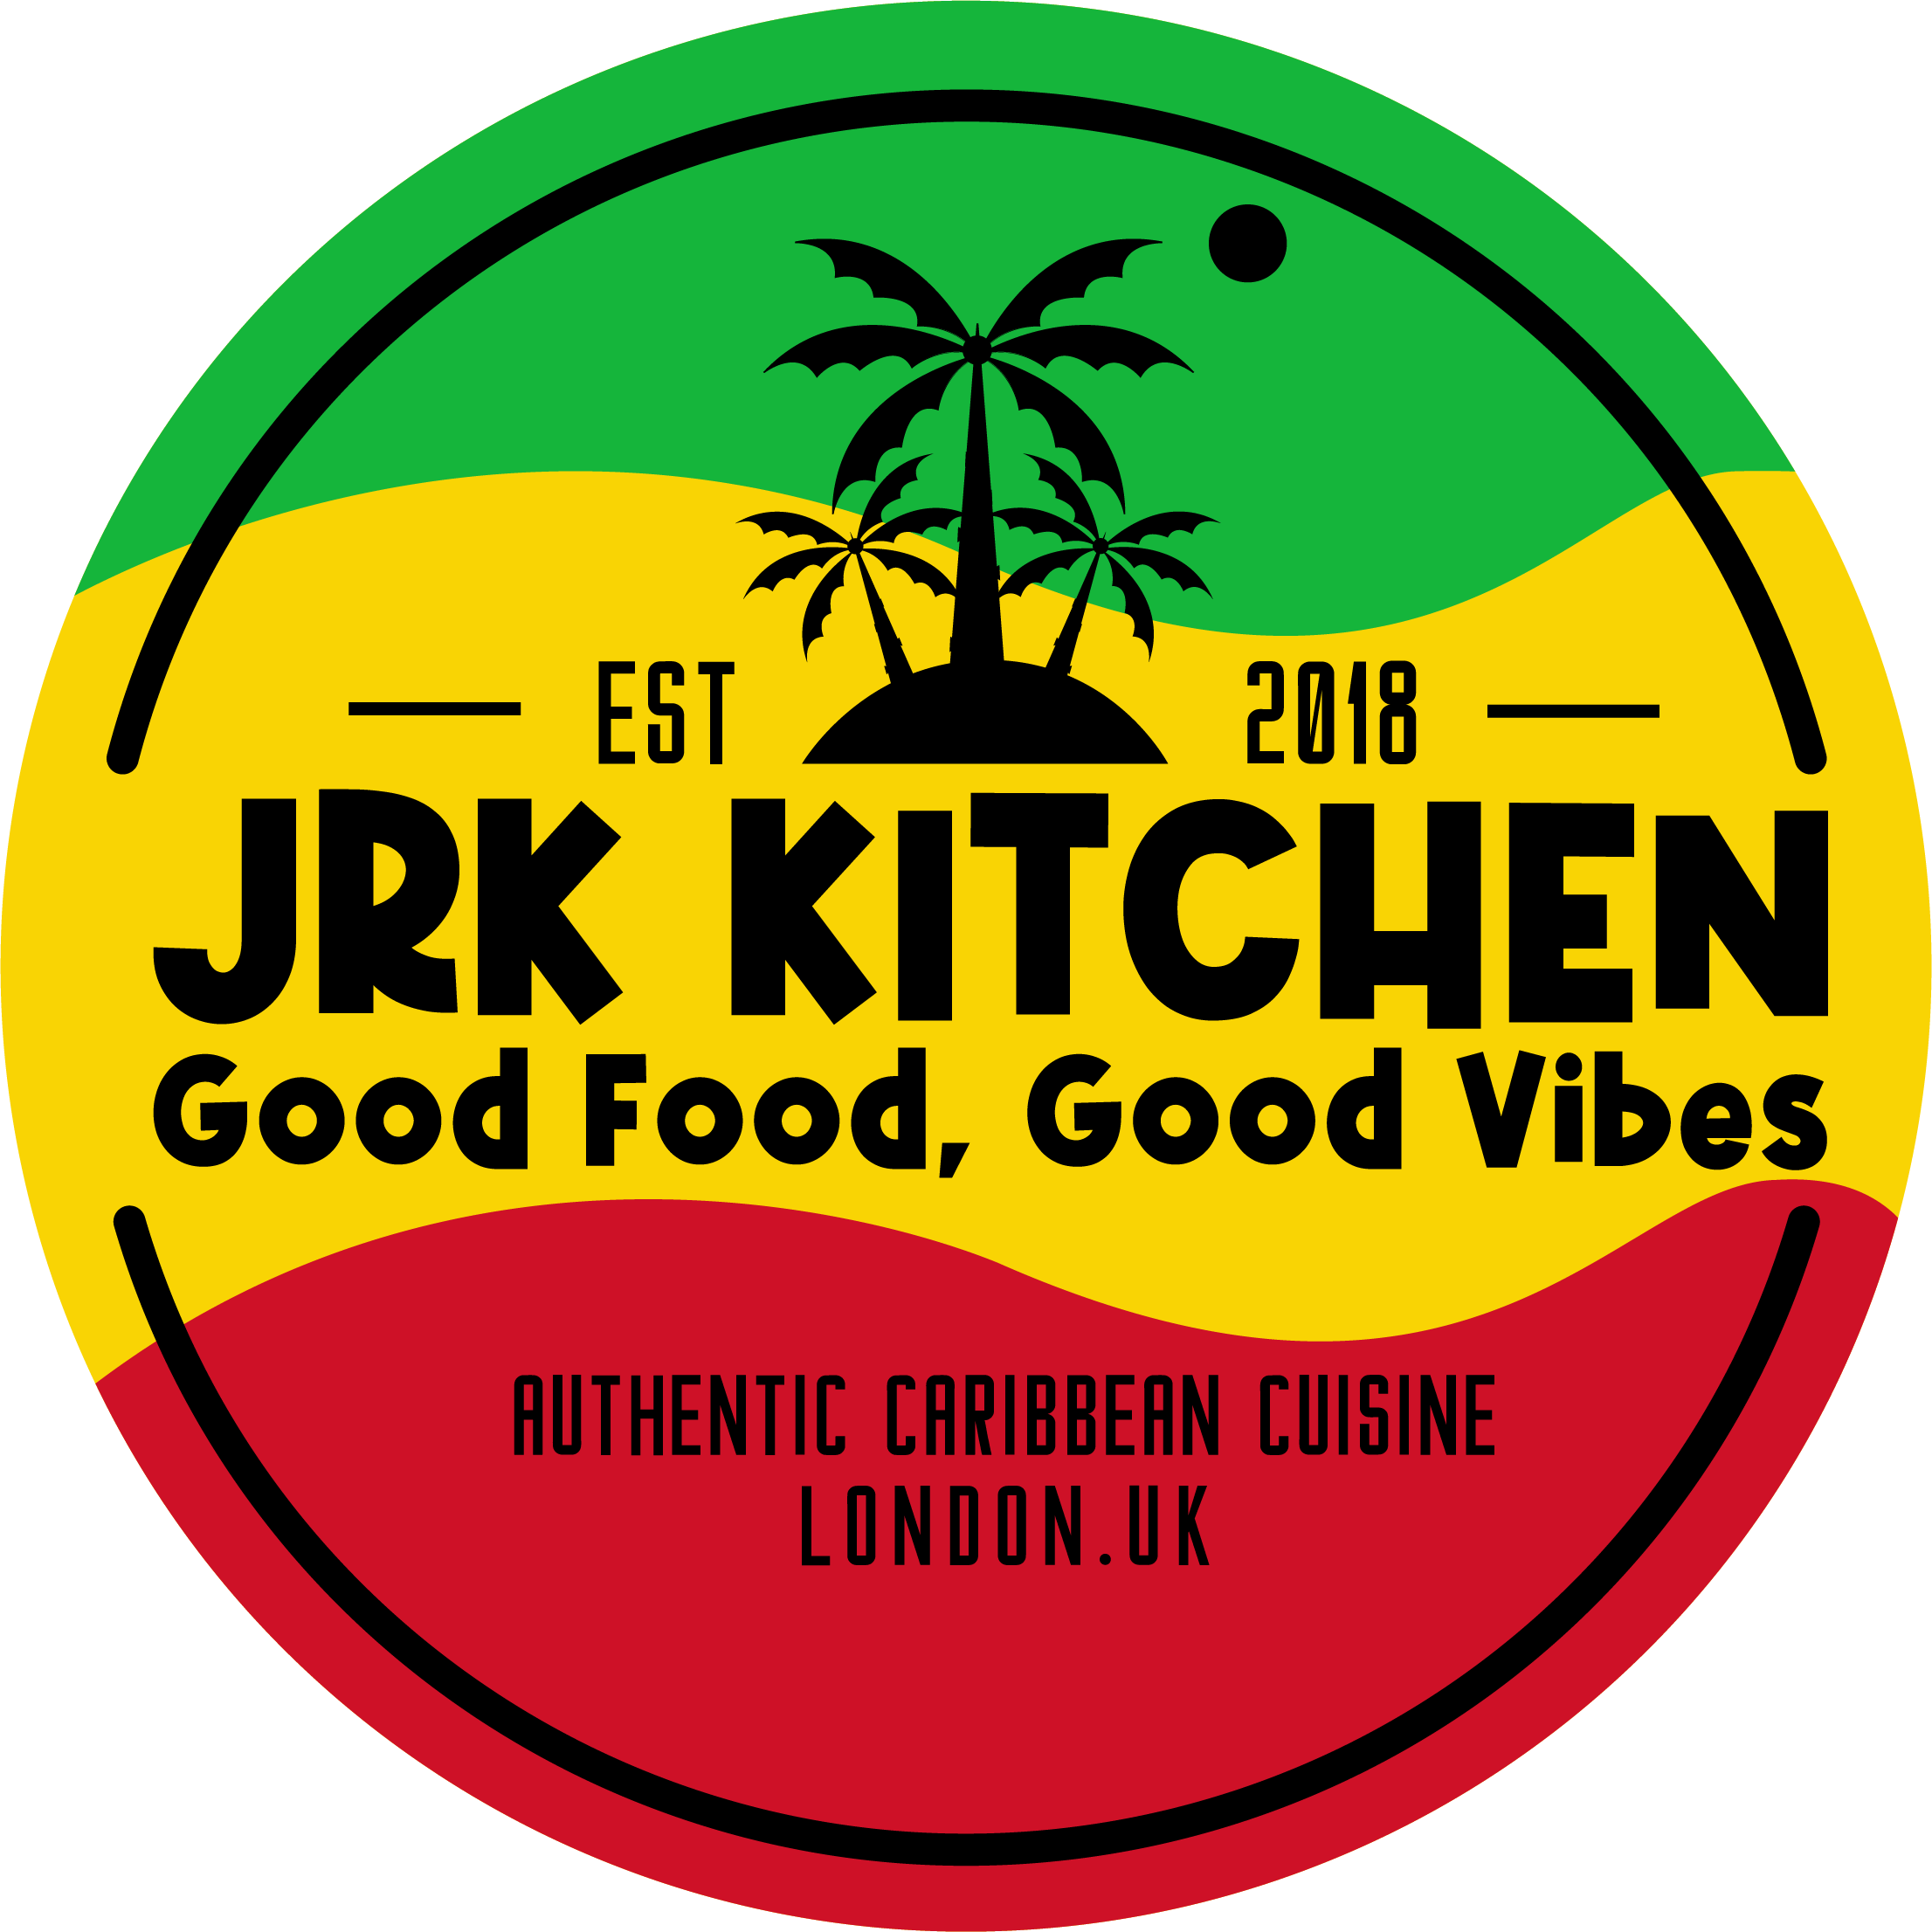 JRK Kitchen